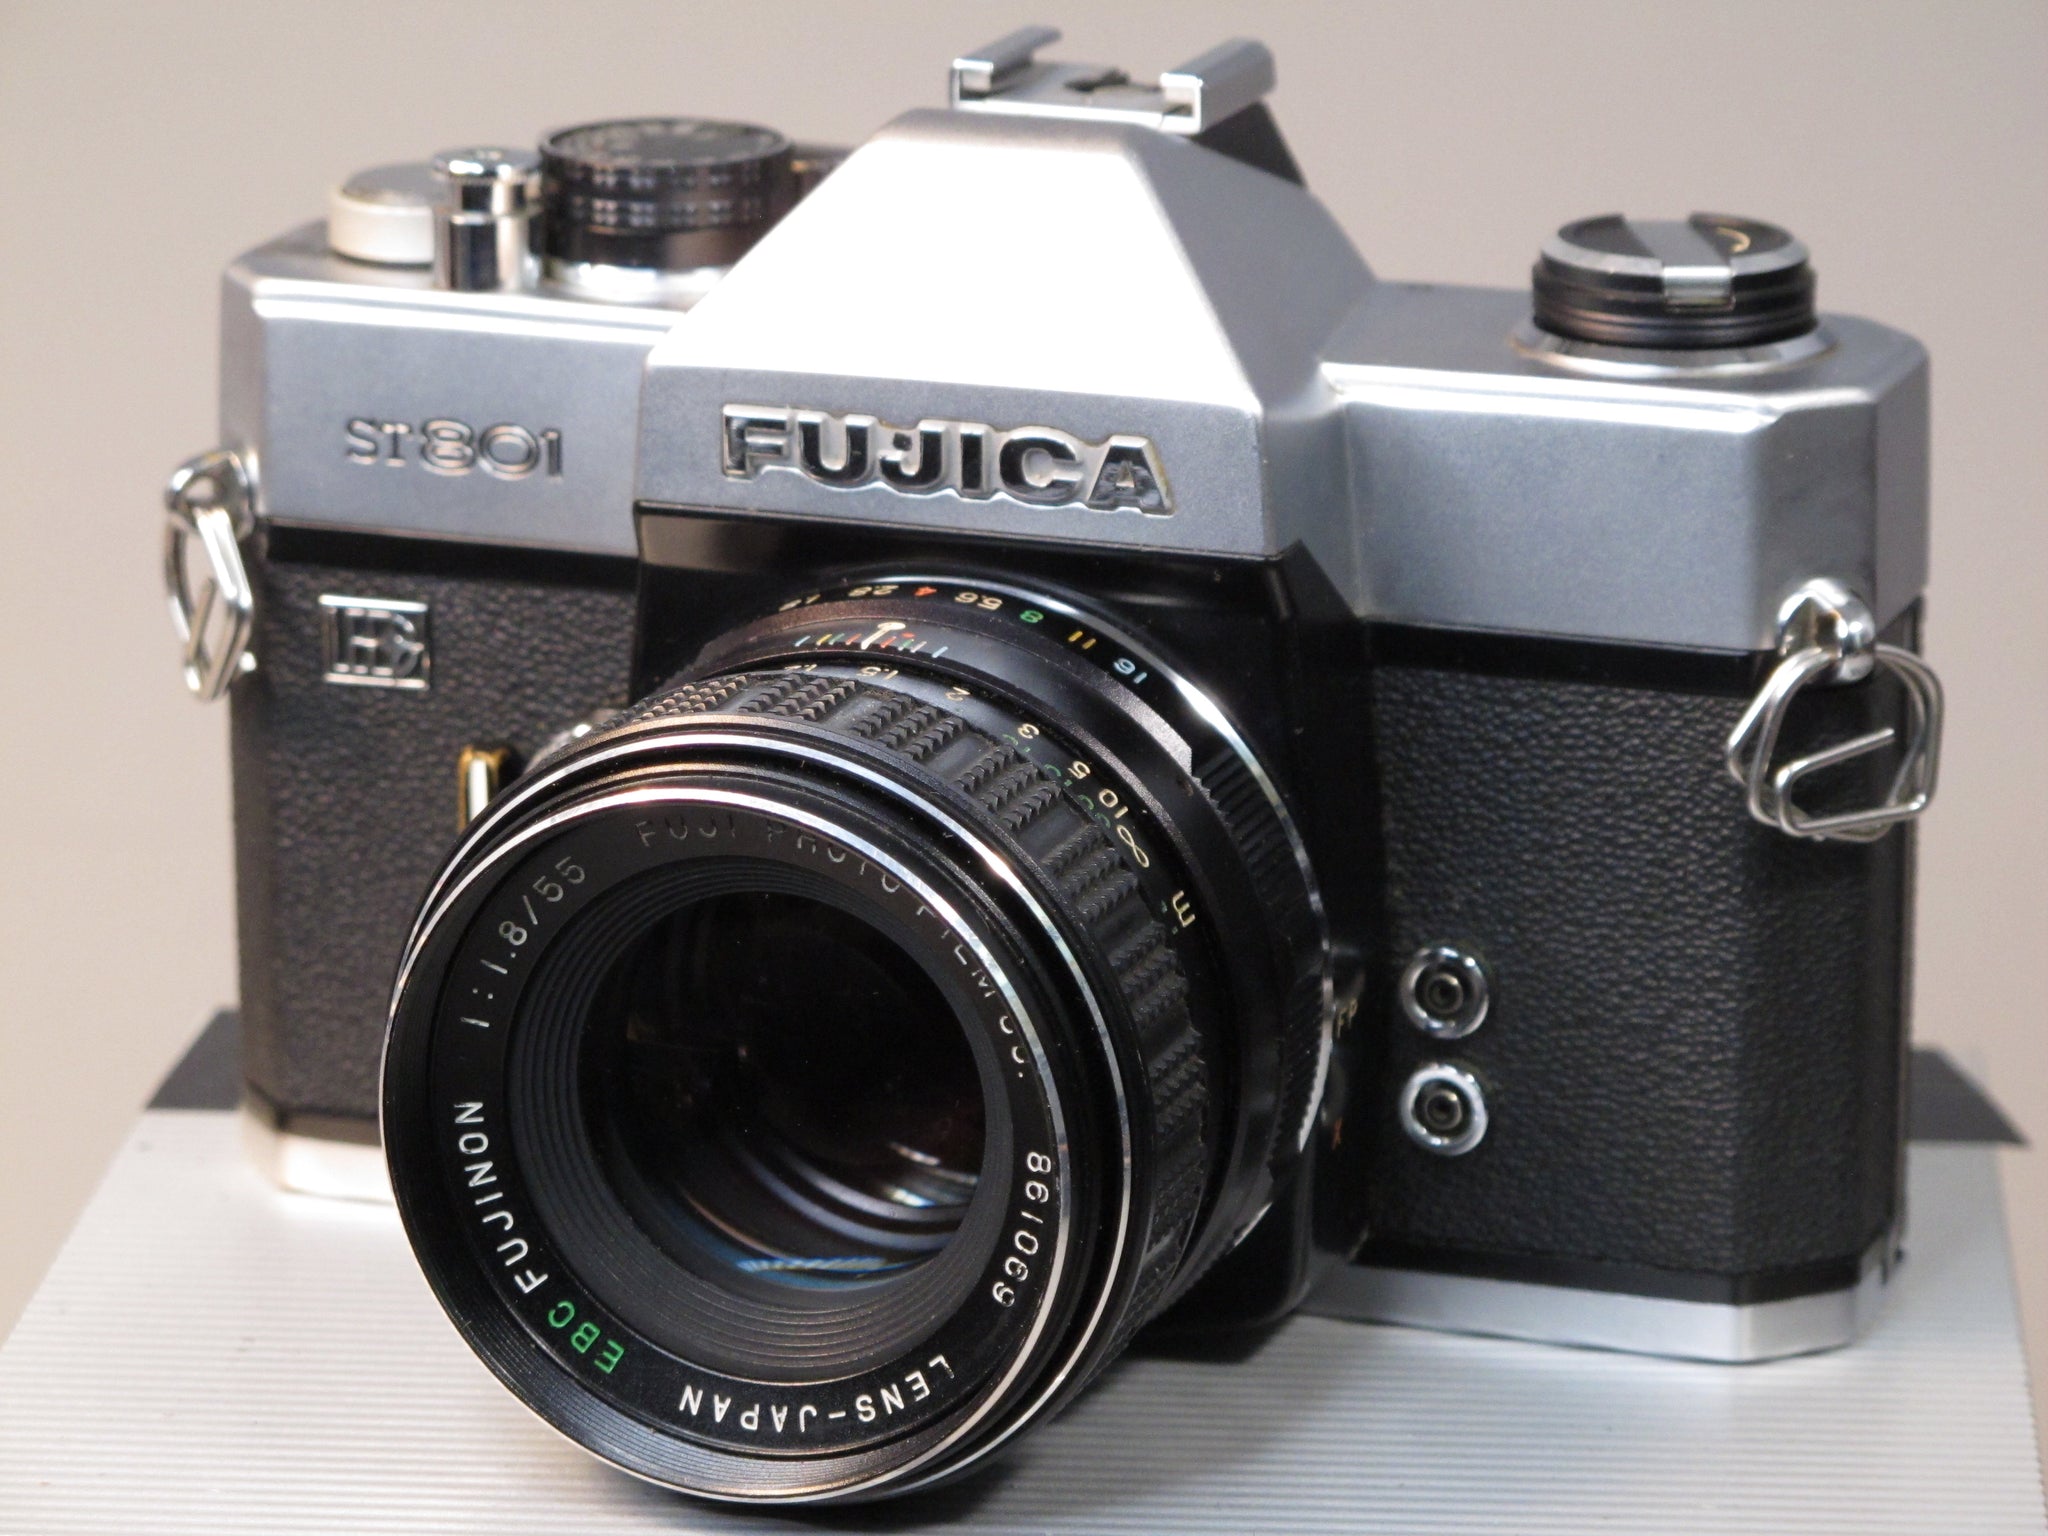 FUJICA ST801 35mm SLR camera with 55mm and 135mm lenses – Phototek